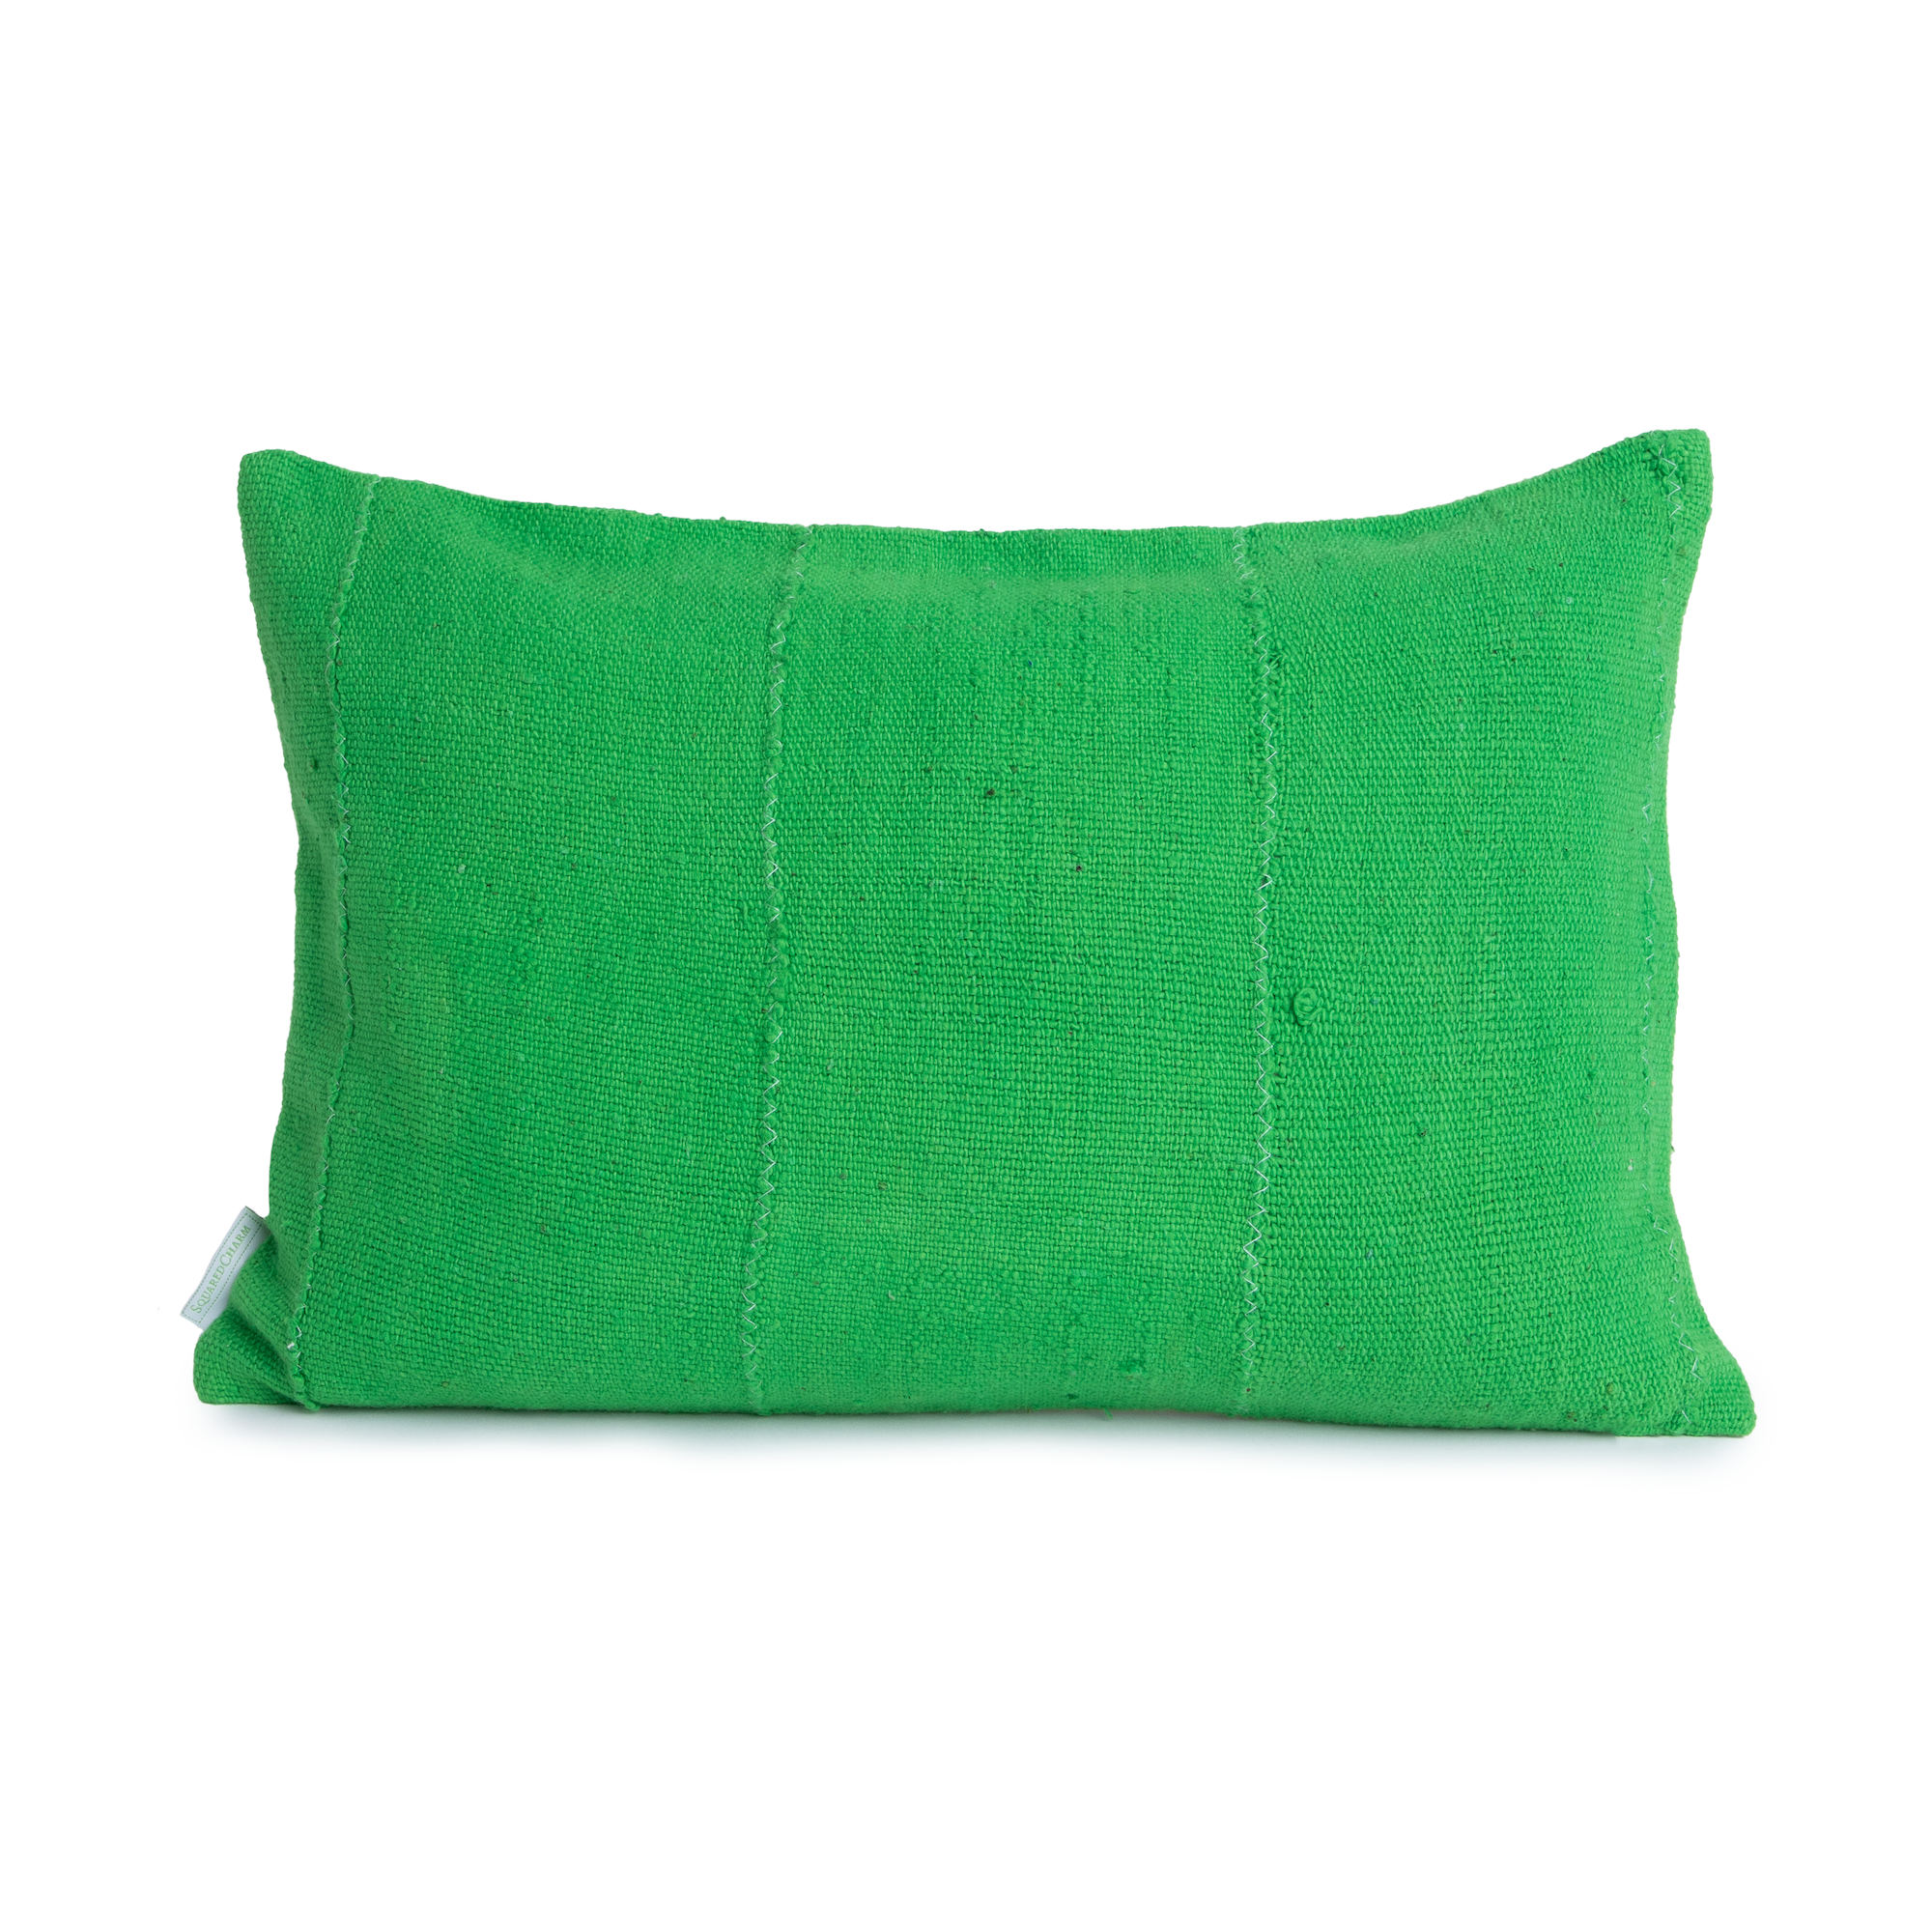 SquaredCharm pillows